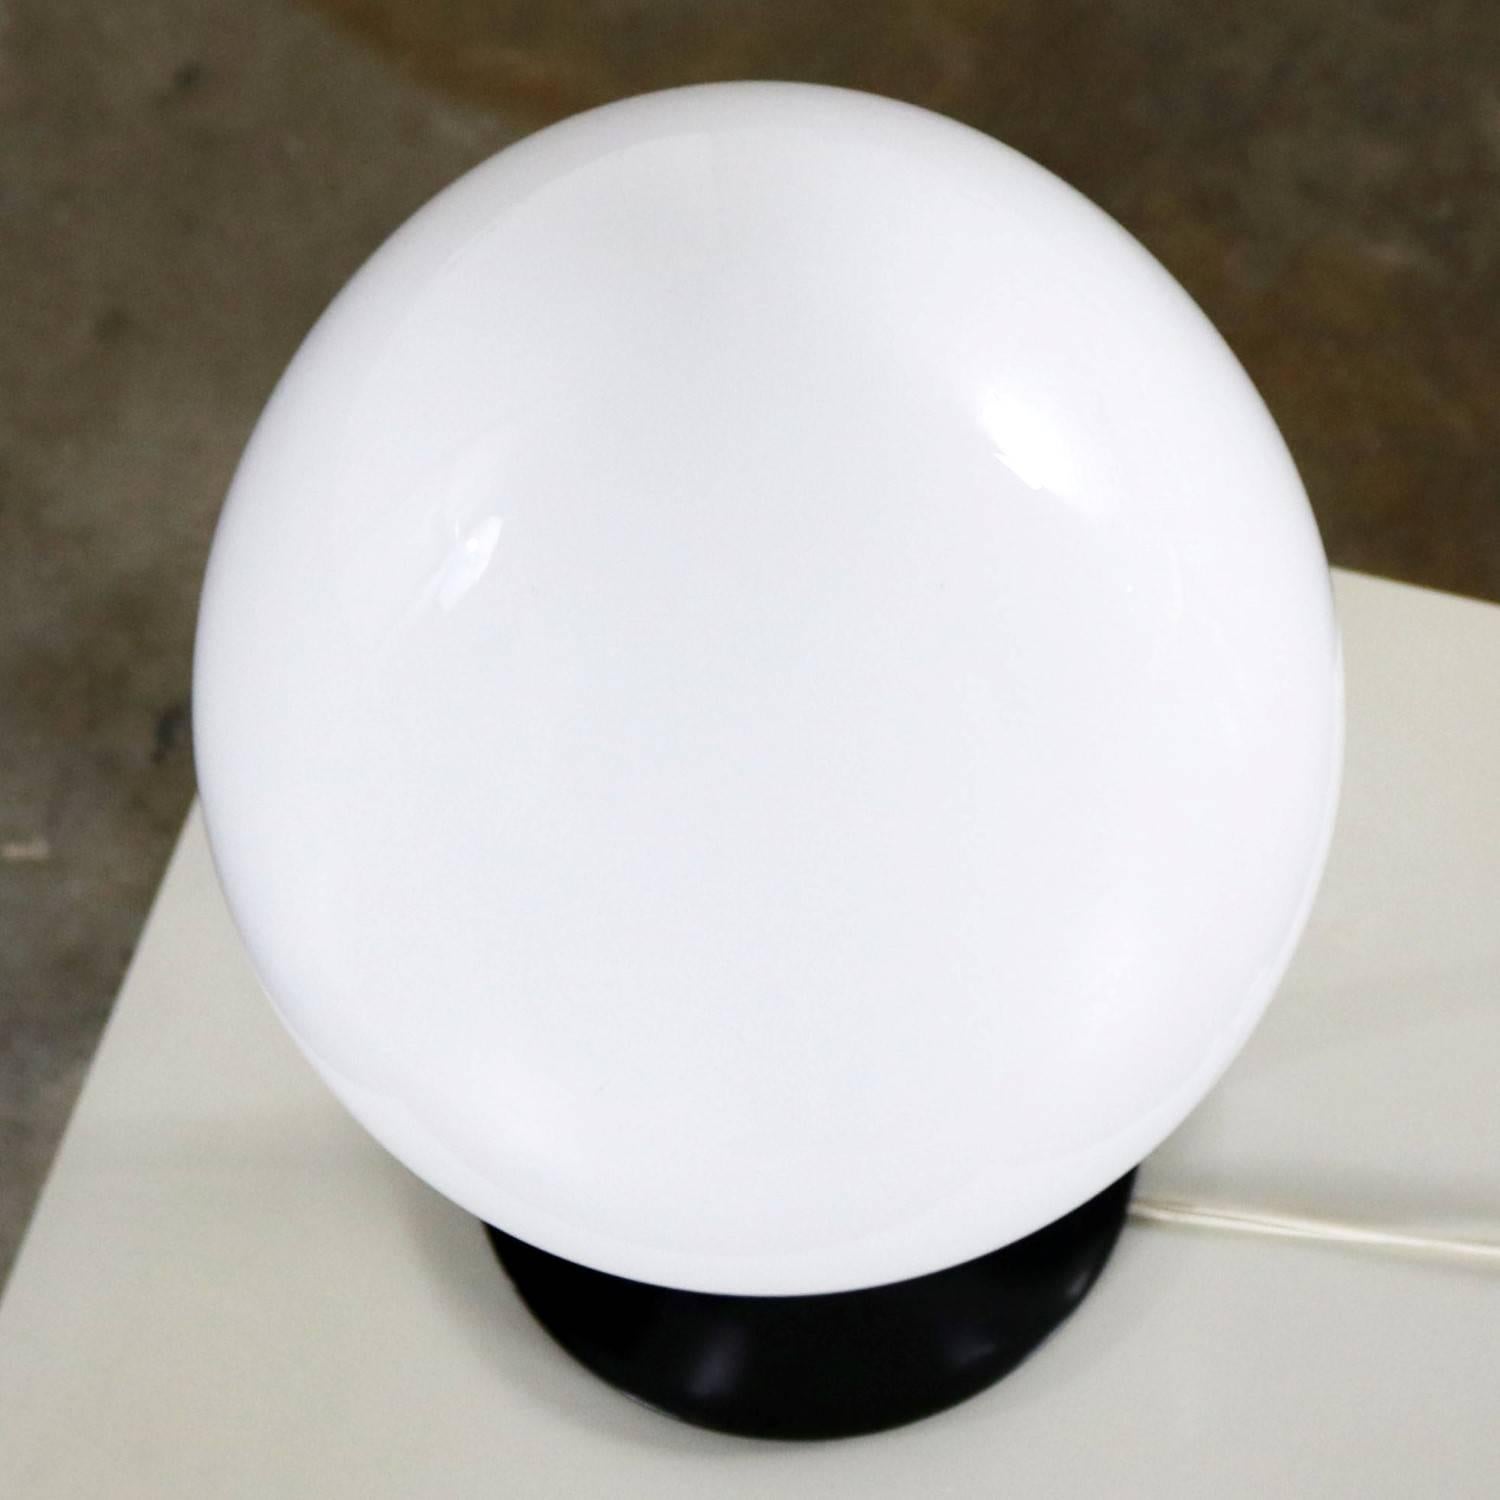 egg shaped table lamp